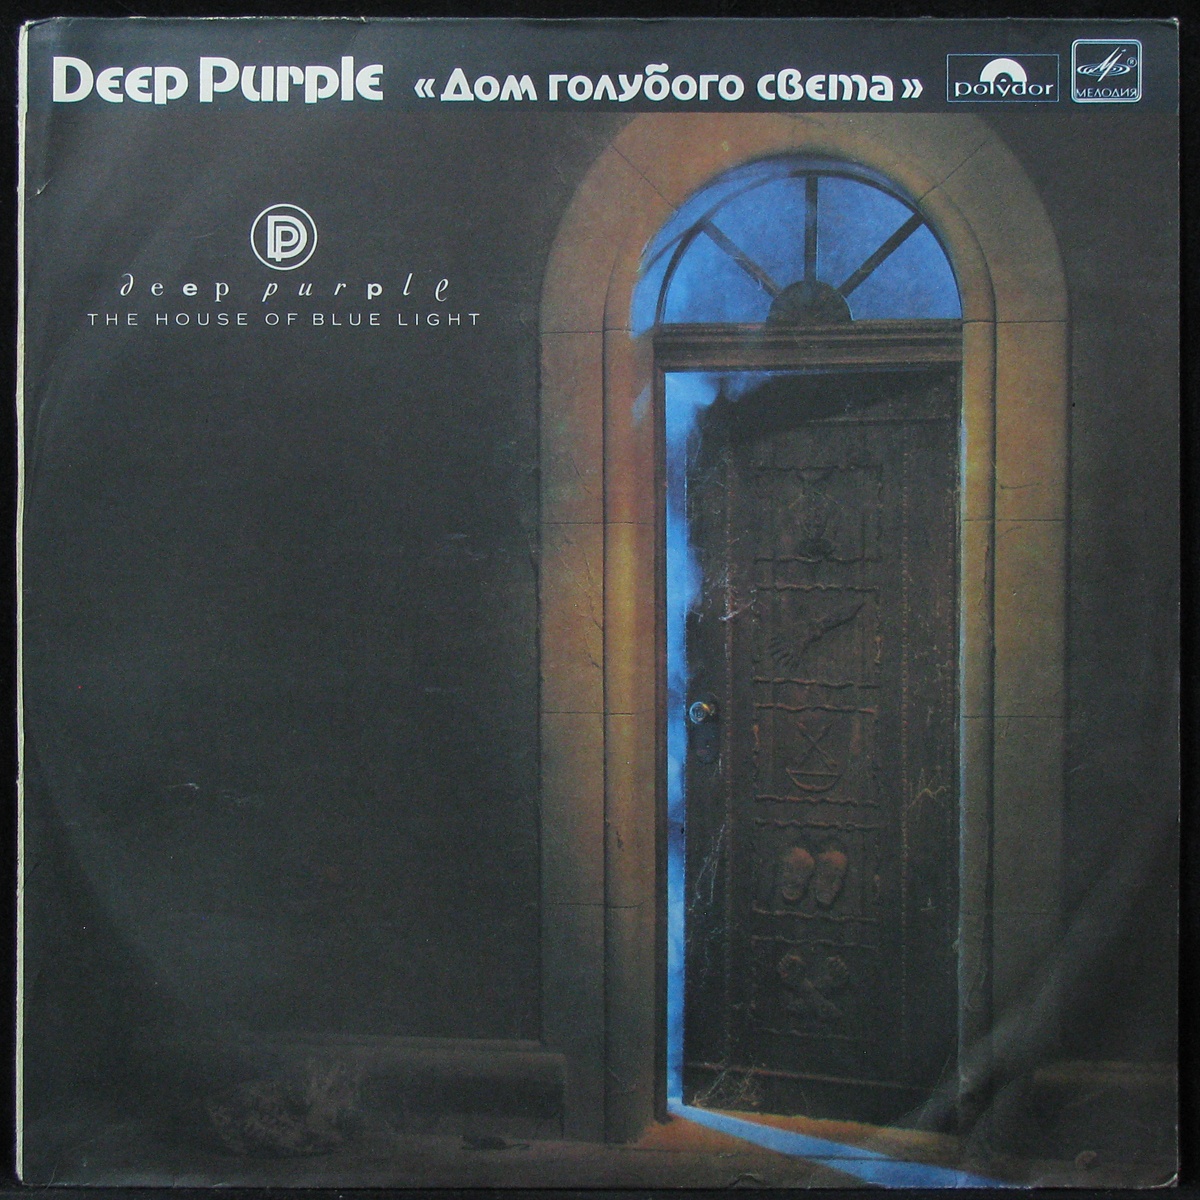 Купить виниловую пластинку Deep Purple - House Of Blue Light